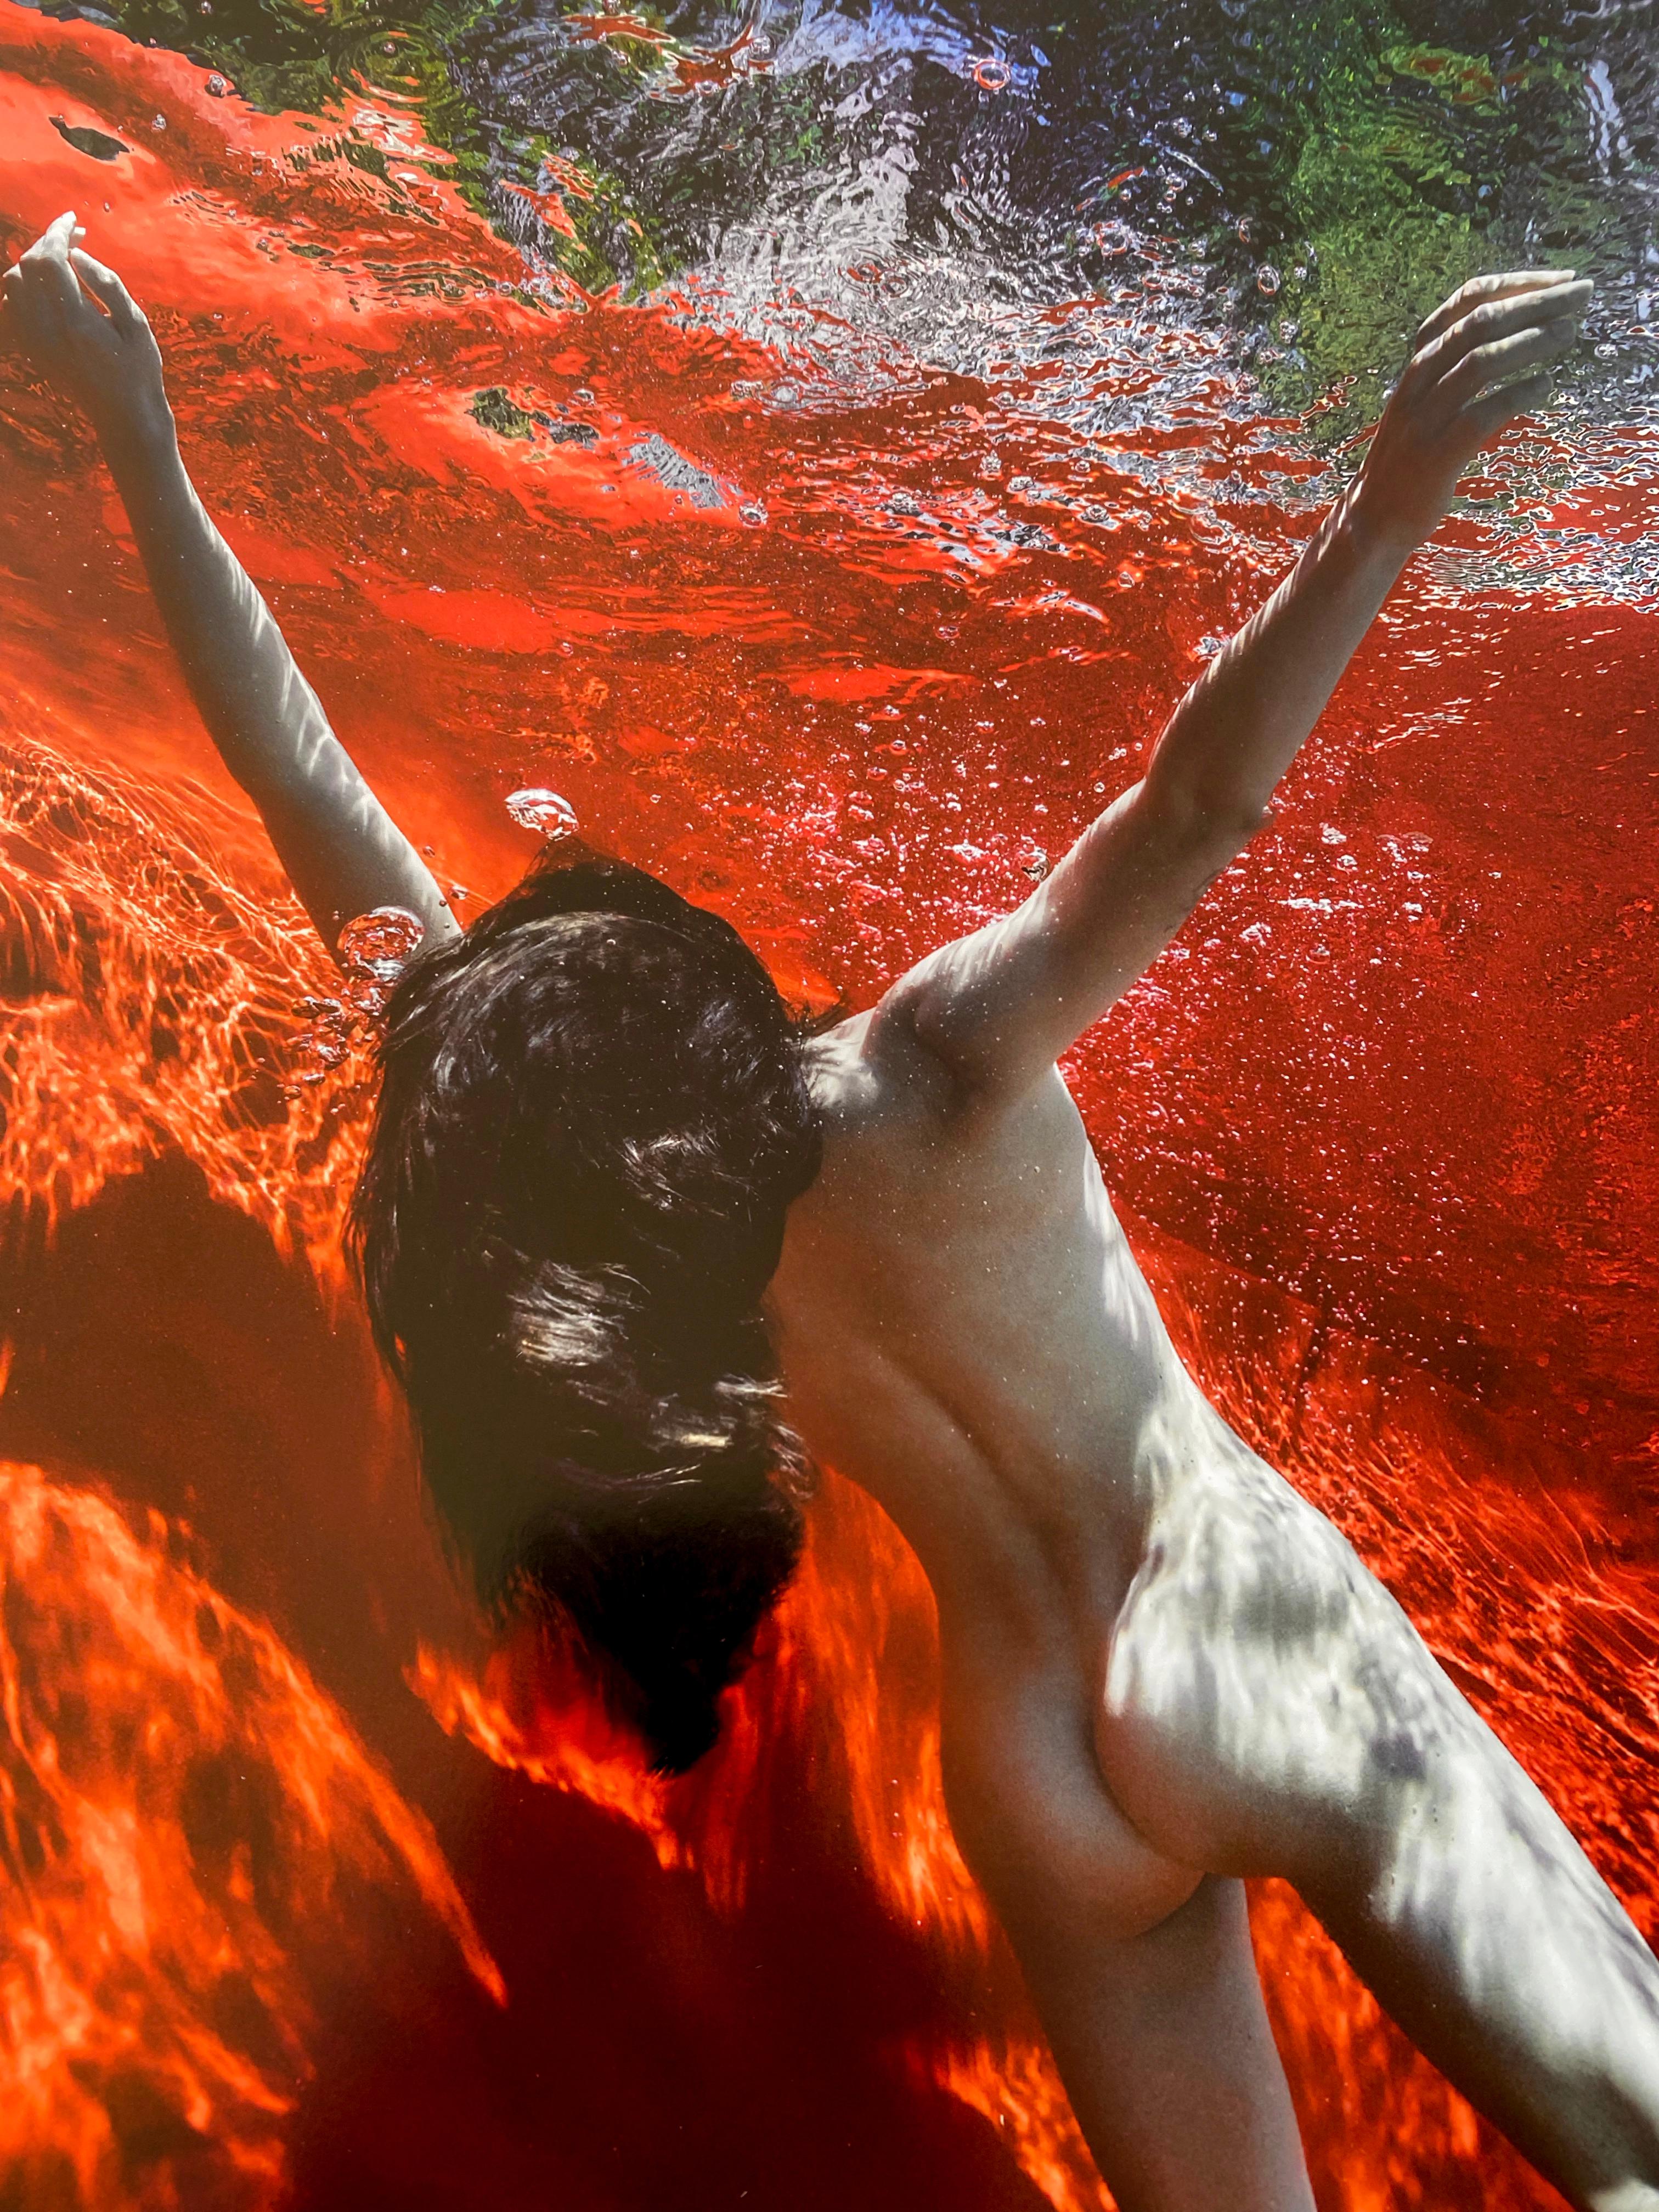 Hot Water - underwater nude photograph - print on aluminum 36